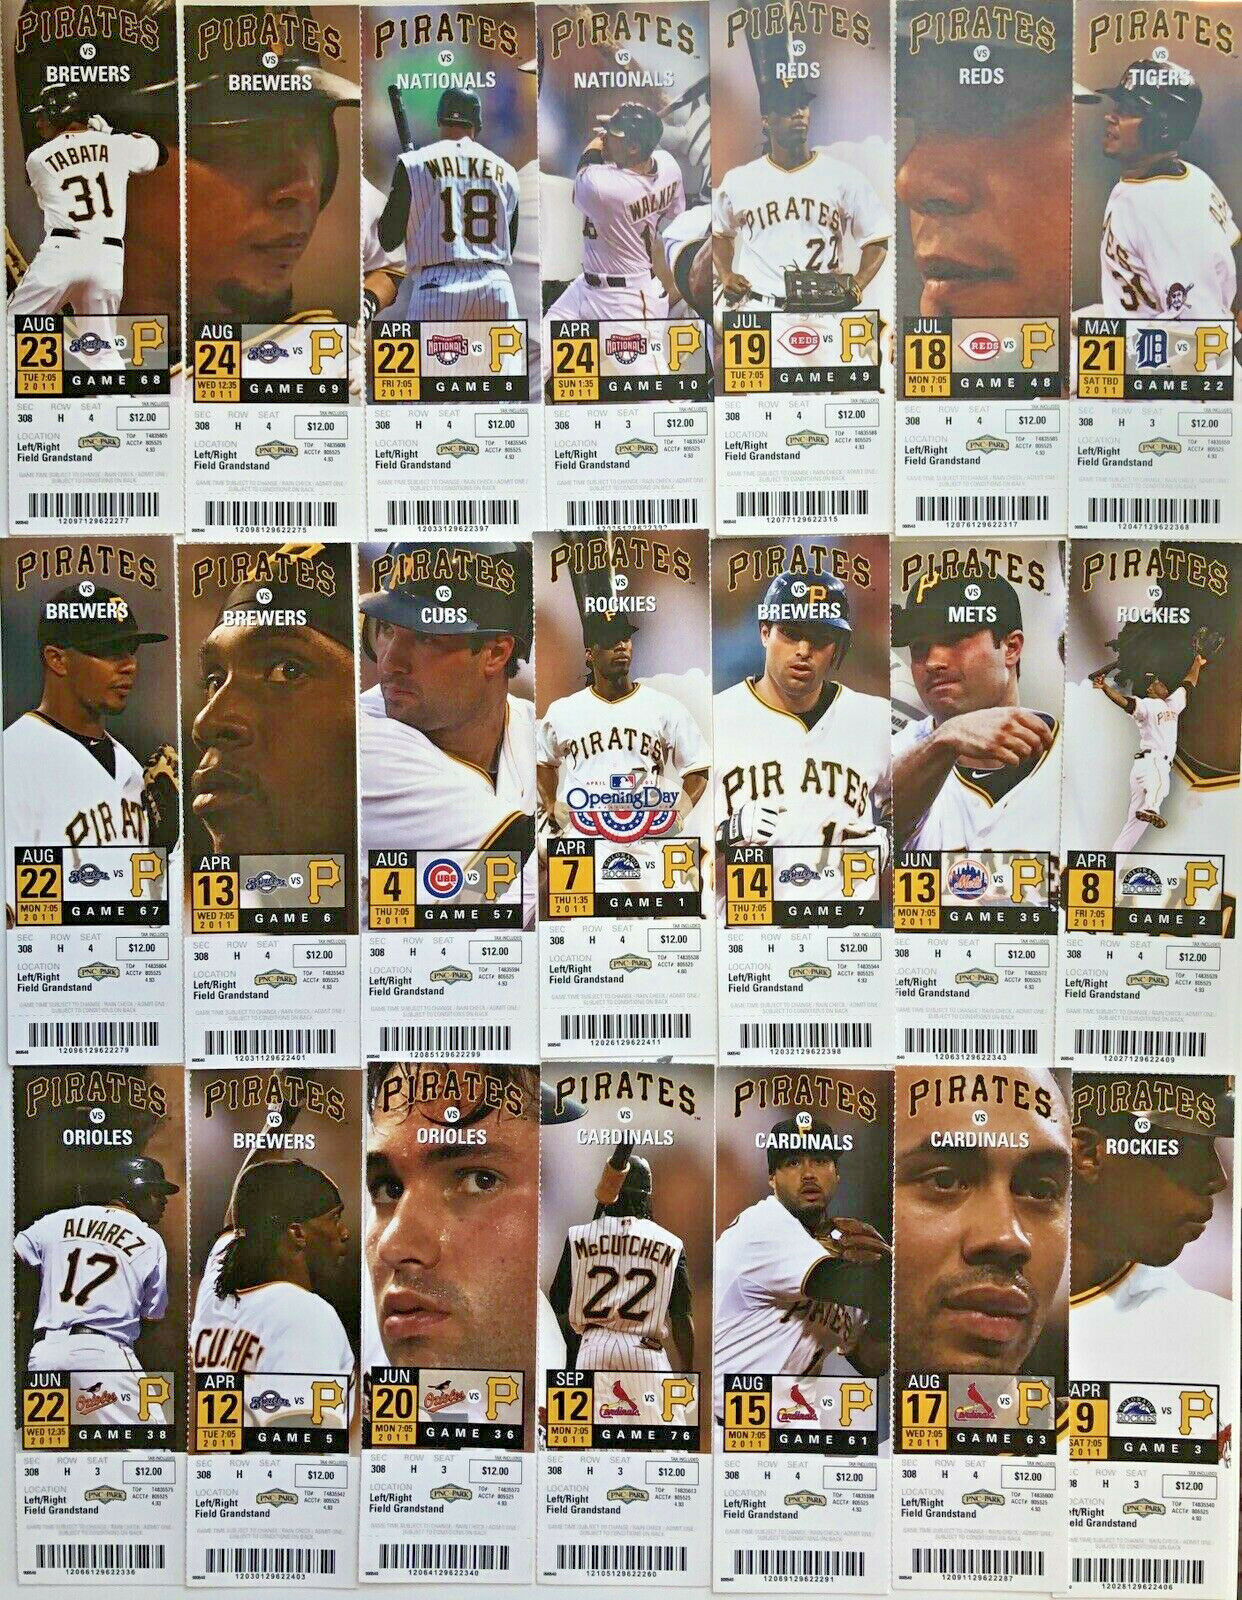 2010-2011-2012-2013-2014 Pittsburgh Pirates Season Ticket Stubs Mint! Free Ship!